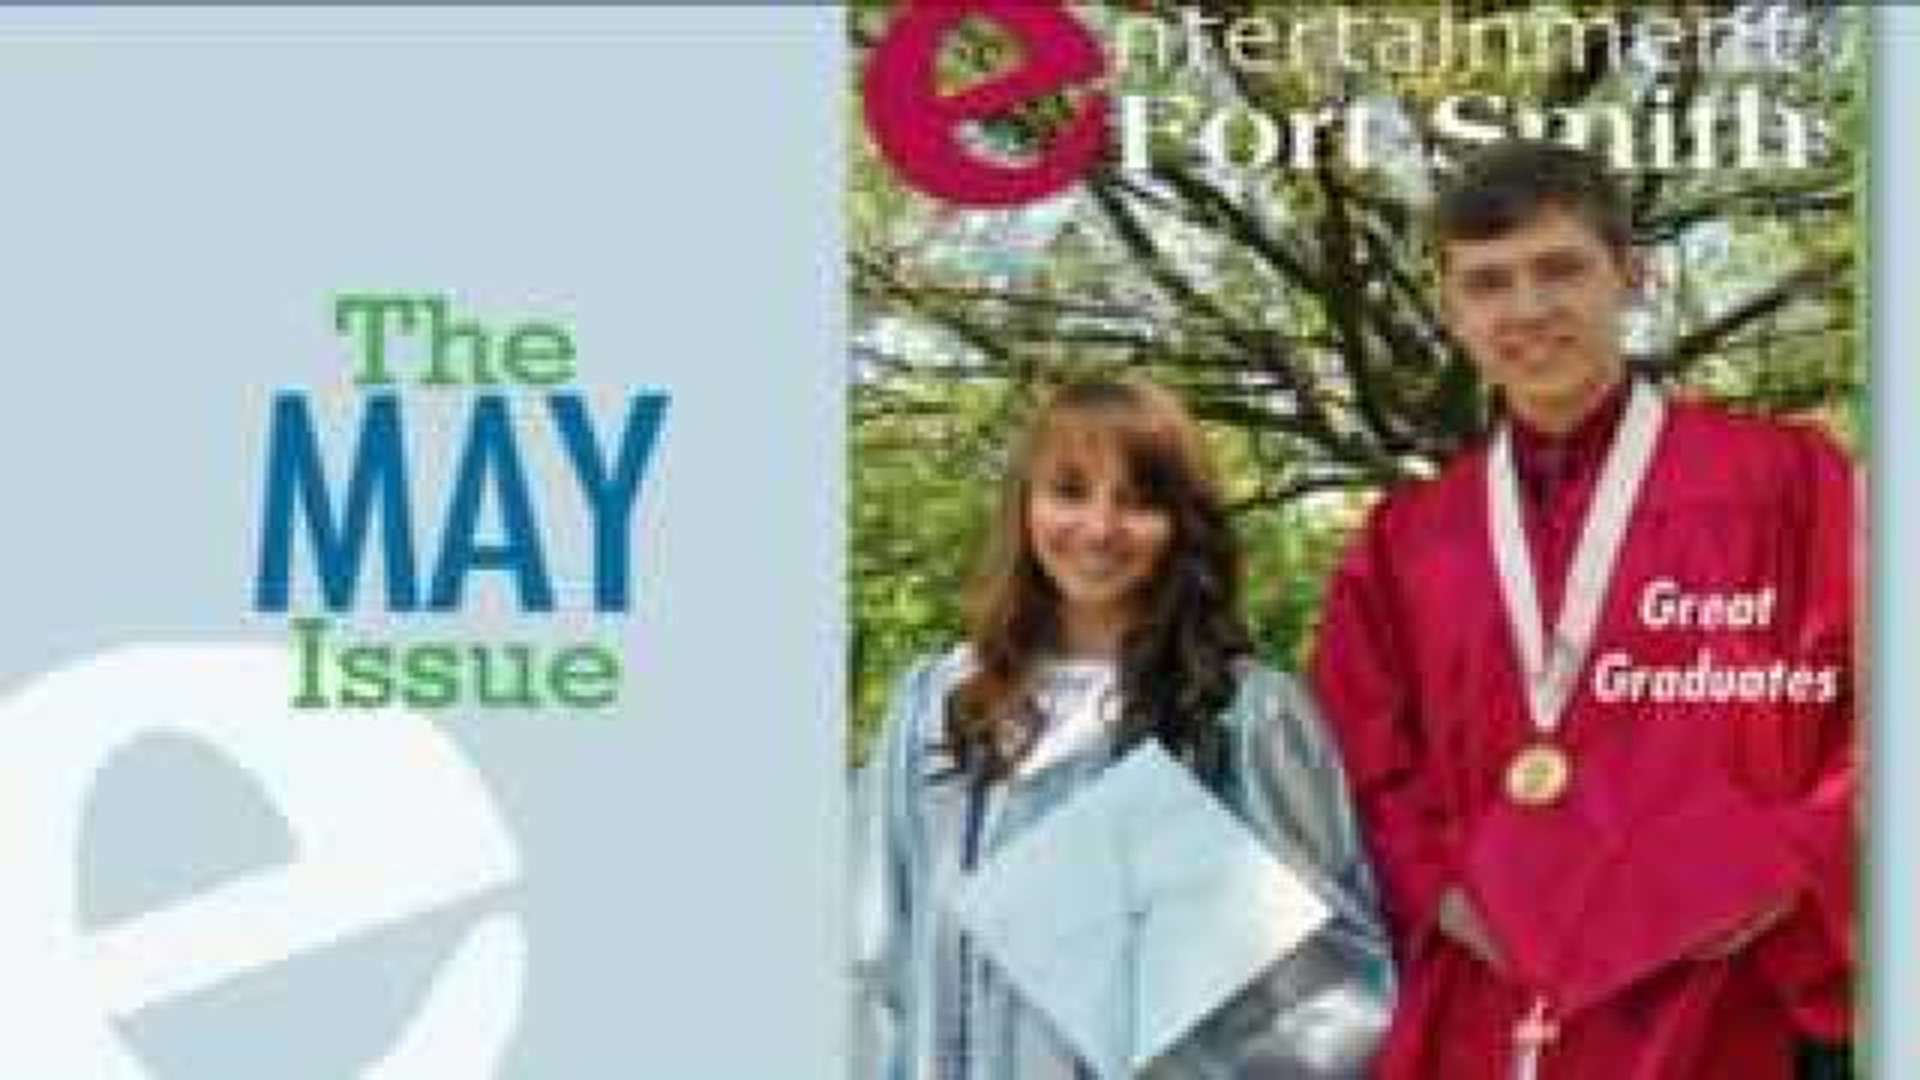 E Fort Smith: Graduation Issue